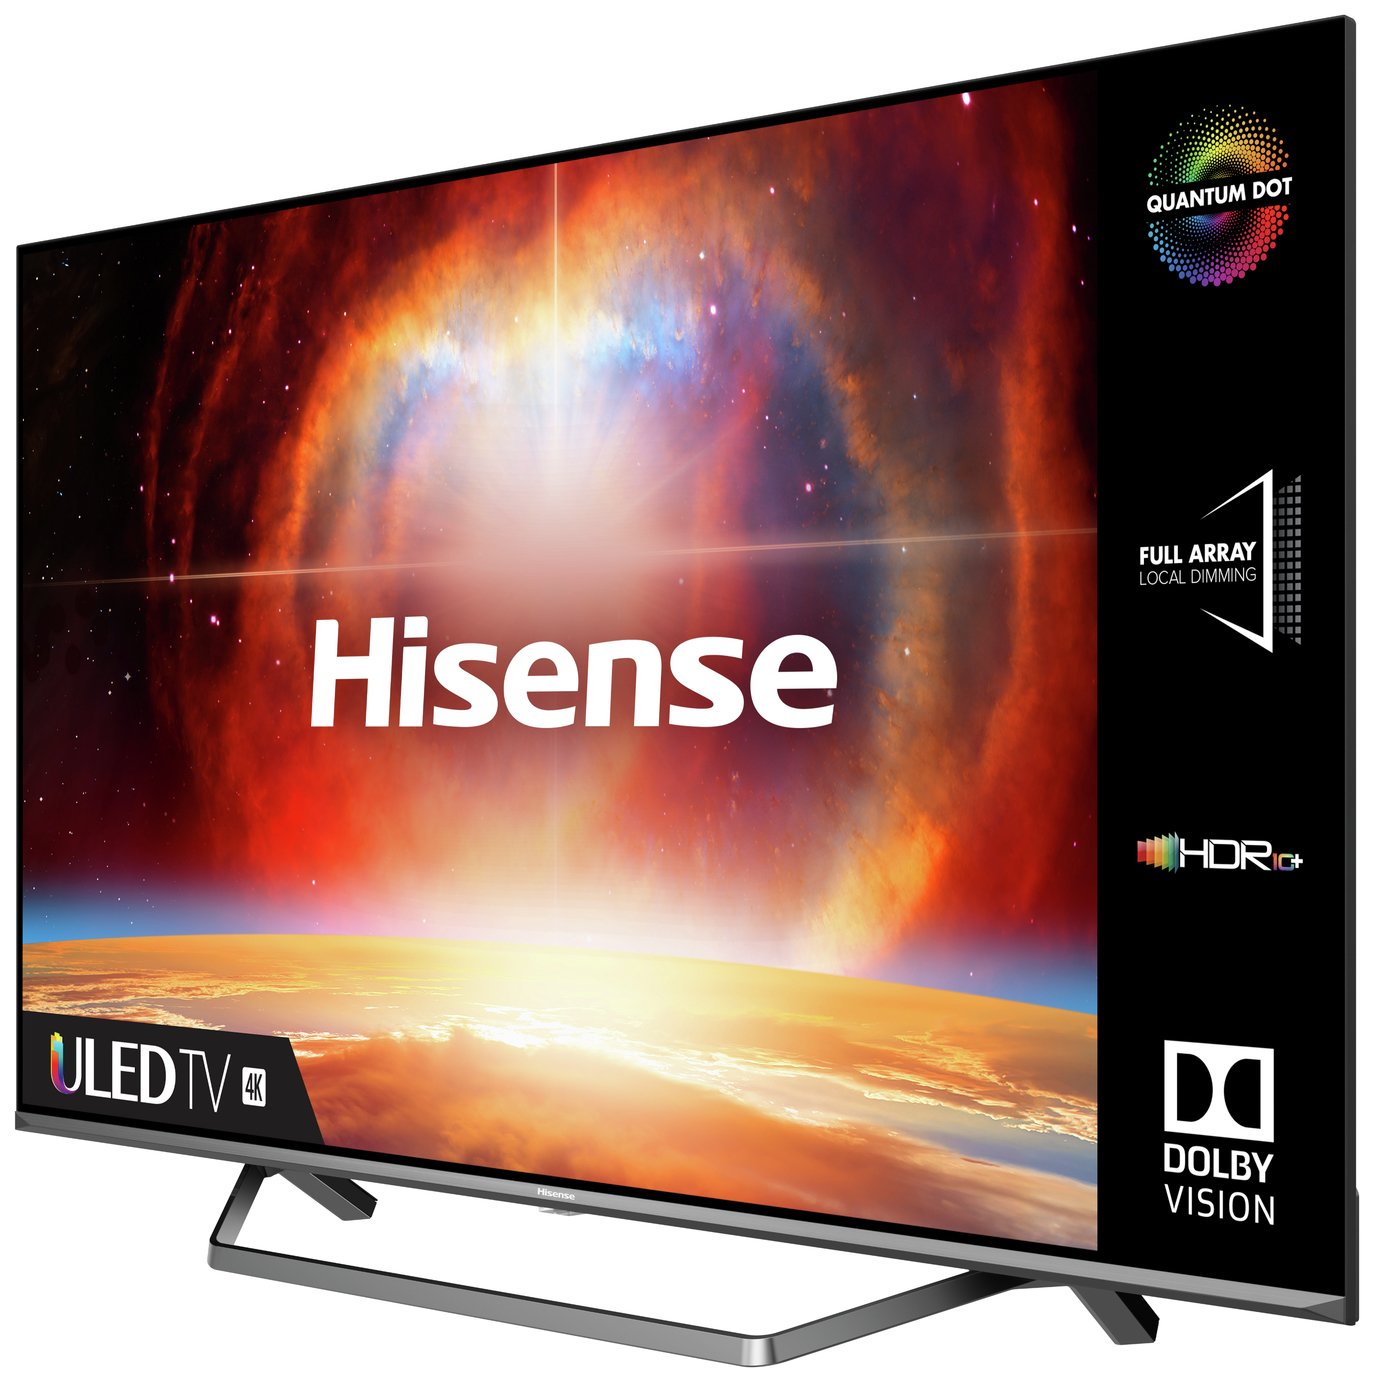 Hisense 65U7QFTUK 65 Inch Smart 4K Ultra HD QLED TV with HDR Review